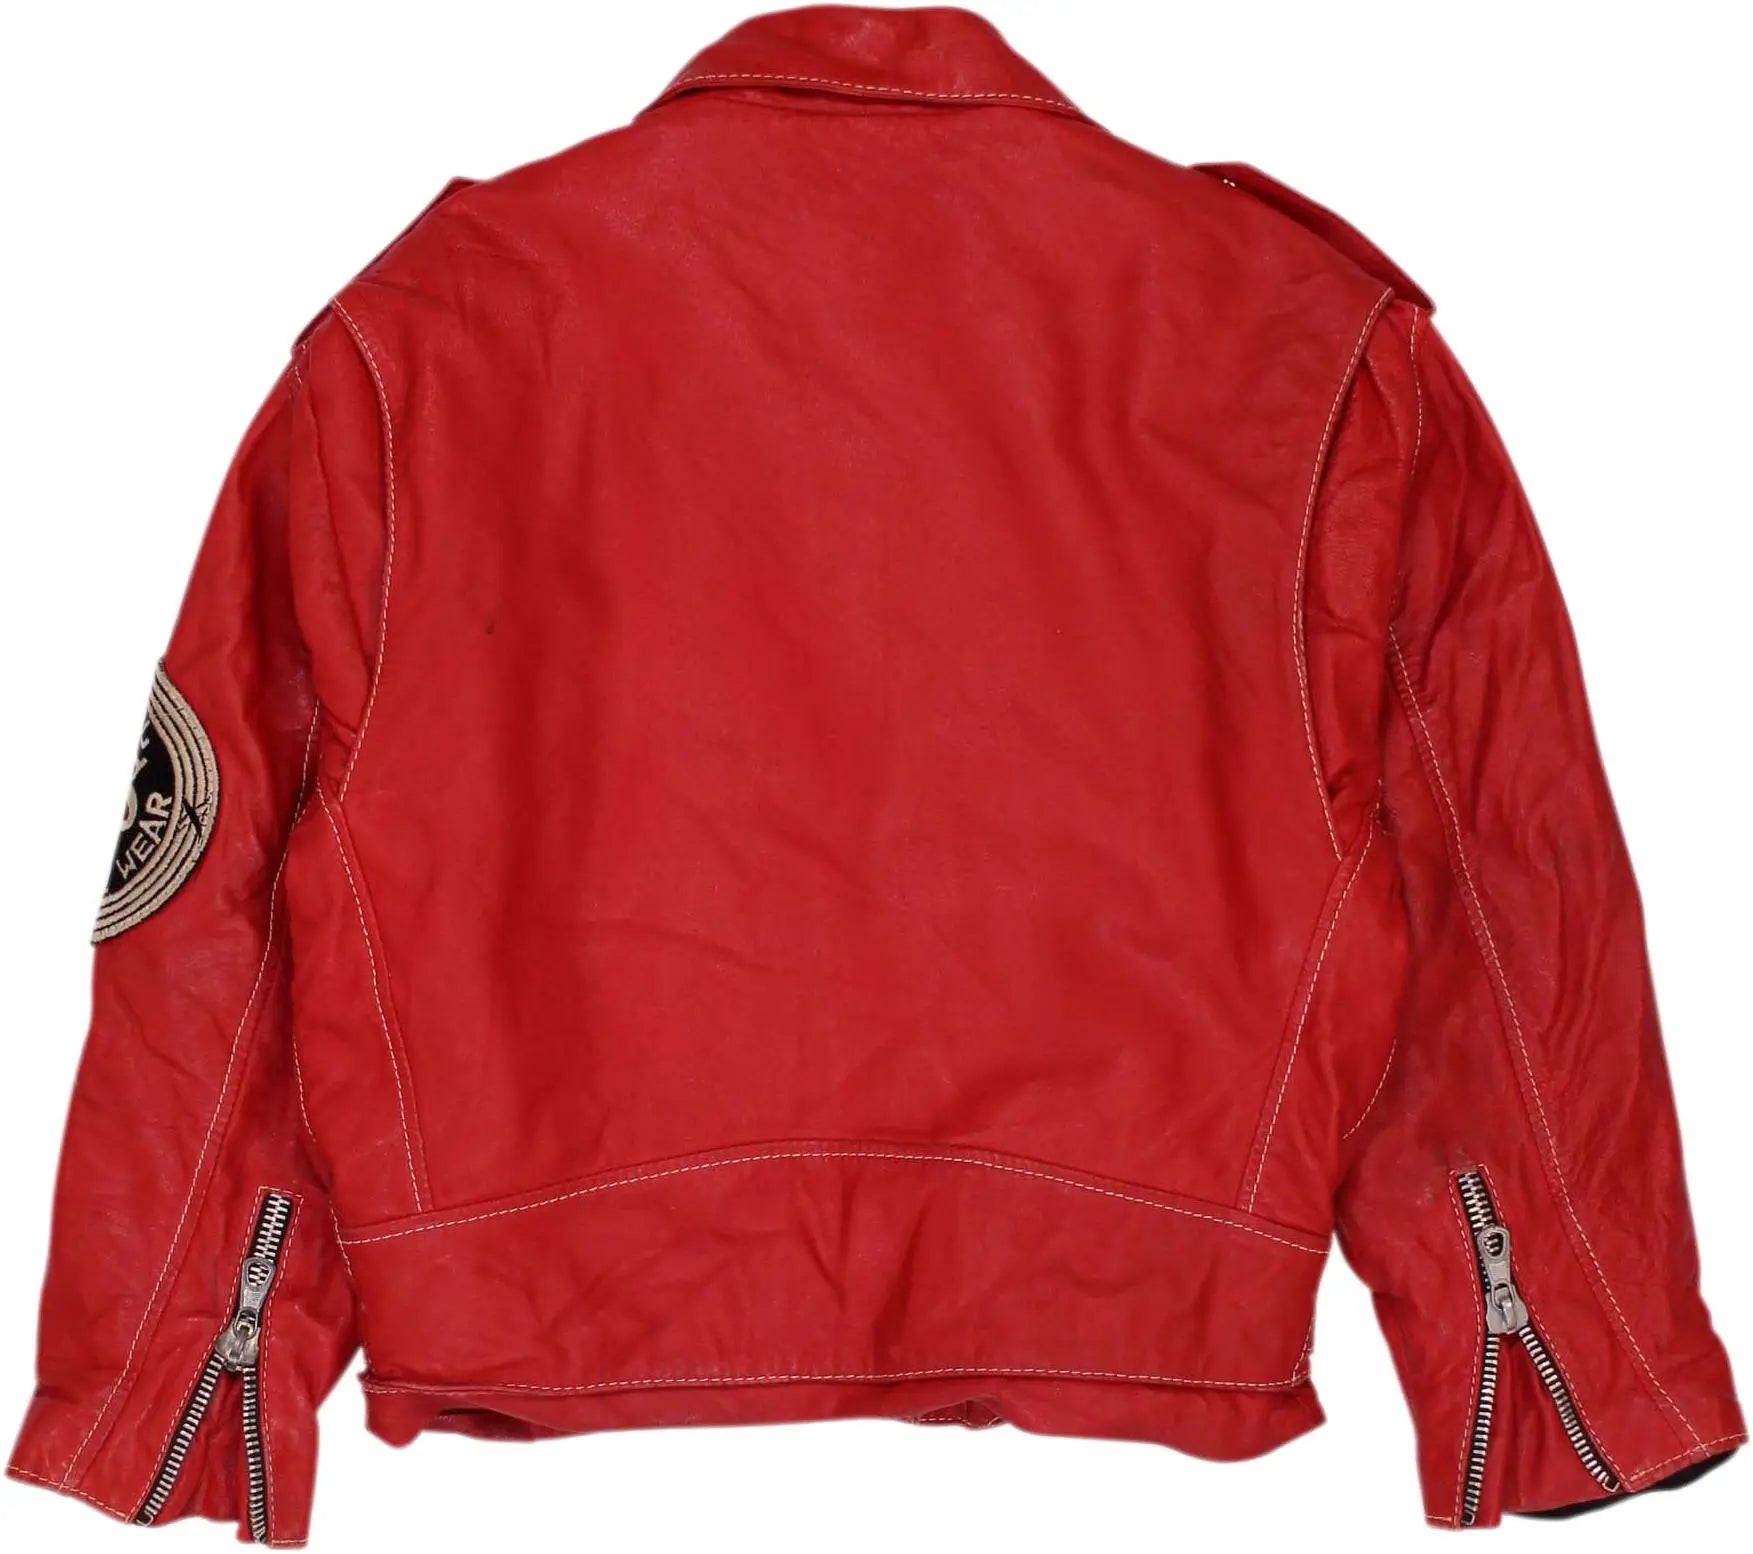 Motor Oil - Red Vintage Leather Jacket- ThriftTale.com - Vintage and second handclothing